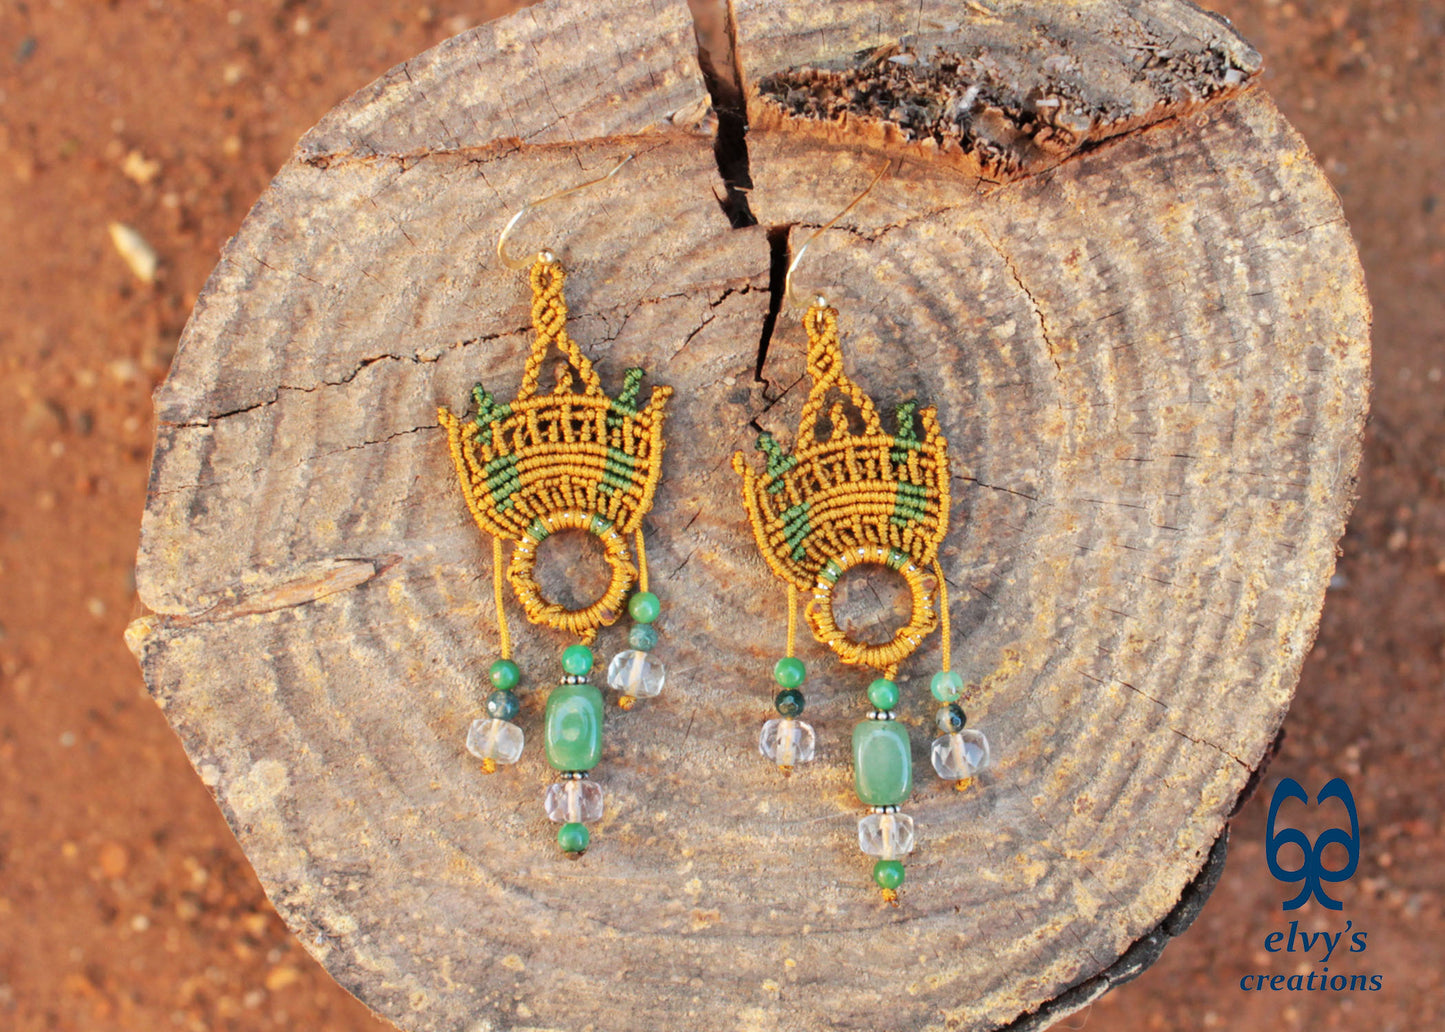 Handmade Gold Macrame Earrings with Green Fluorite Gemstones Dangle